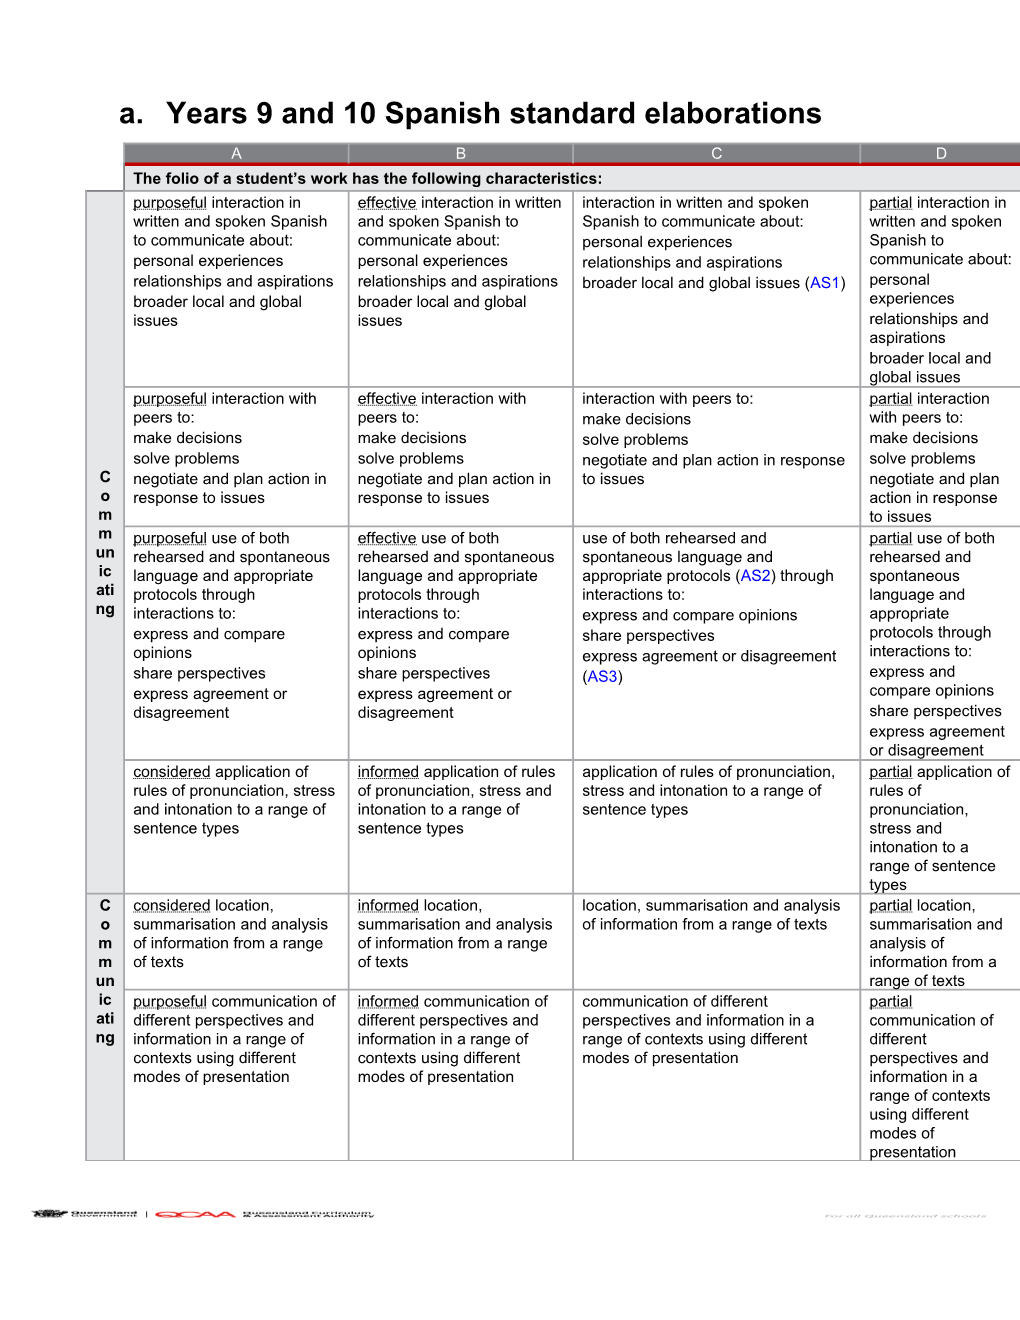 Years 9 and 10 Standard Elaborations Australian Curriculum: Spanish